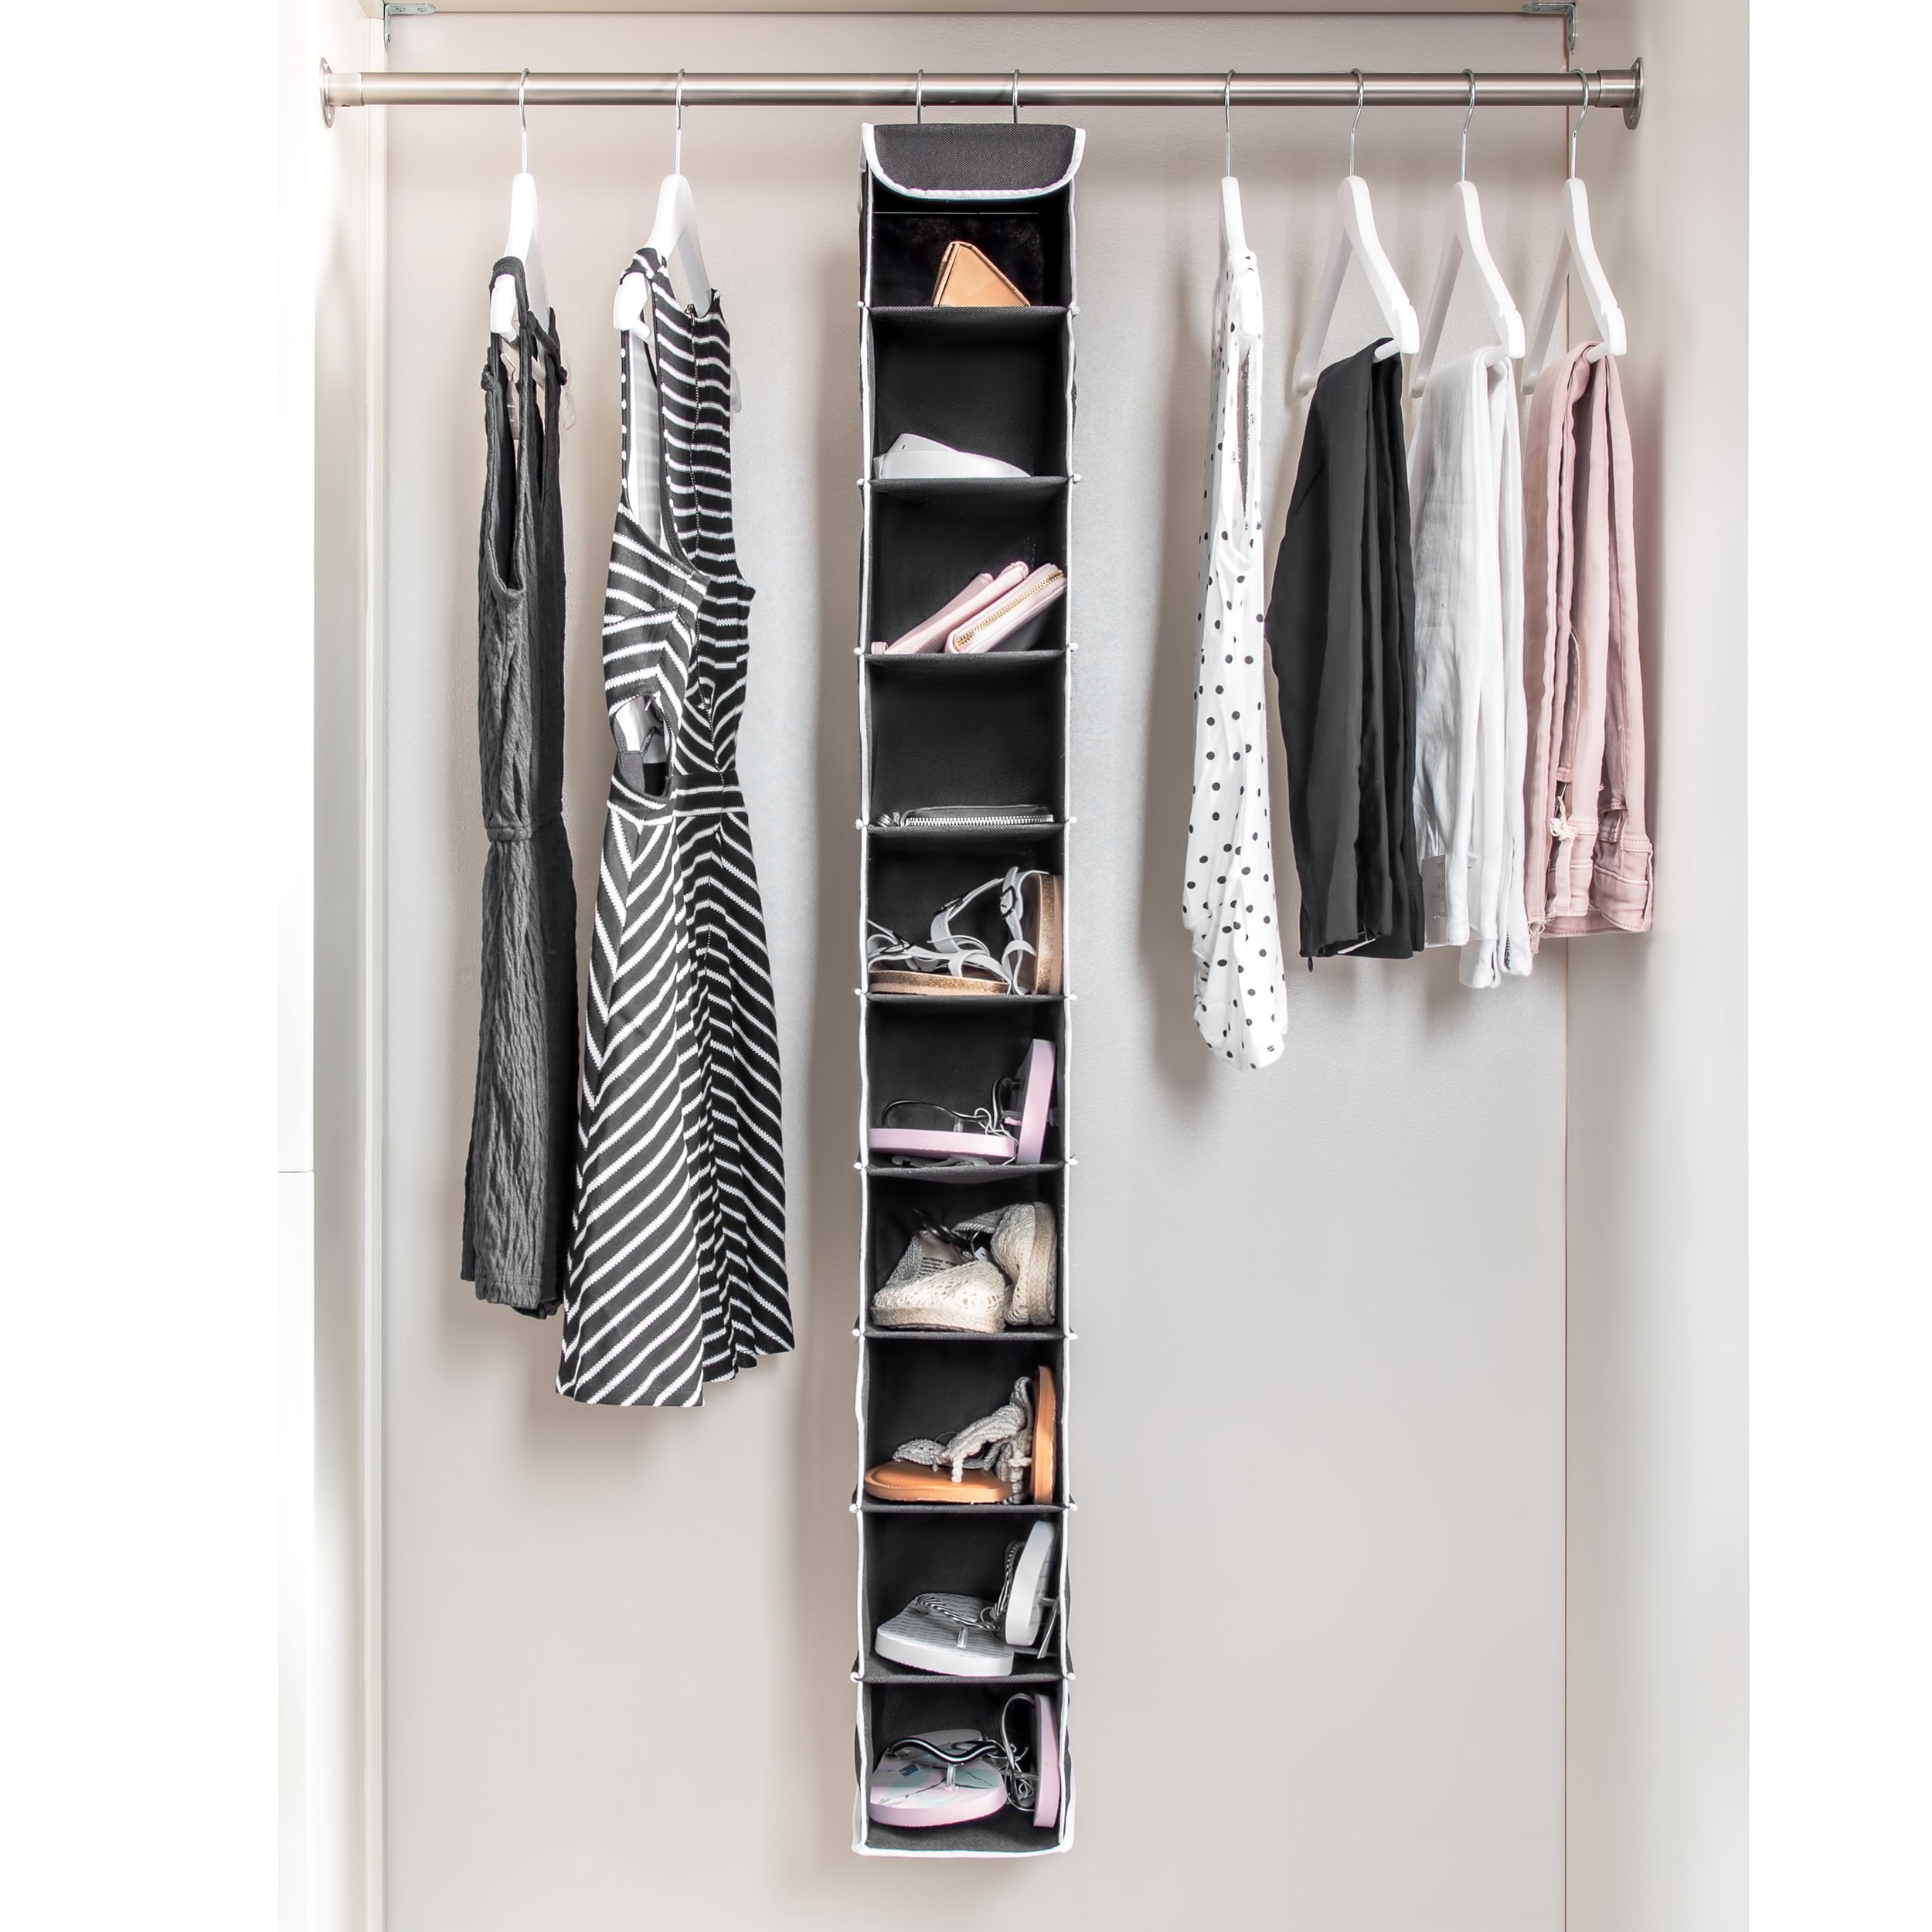 ZOBER Hanging Shoe Organizer for Closet - 10-Shelf Hanging Shoe Rack W/Side Mesh Pockets - 1 Pack Space Saving Shoe Holder (Black)